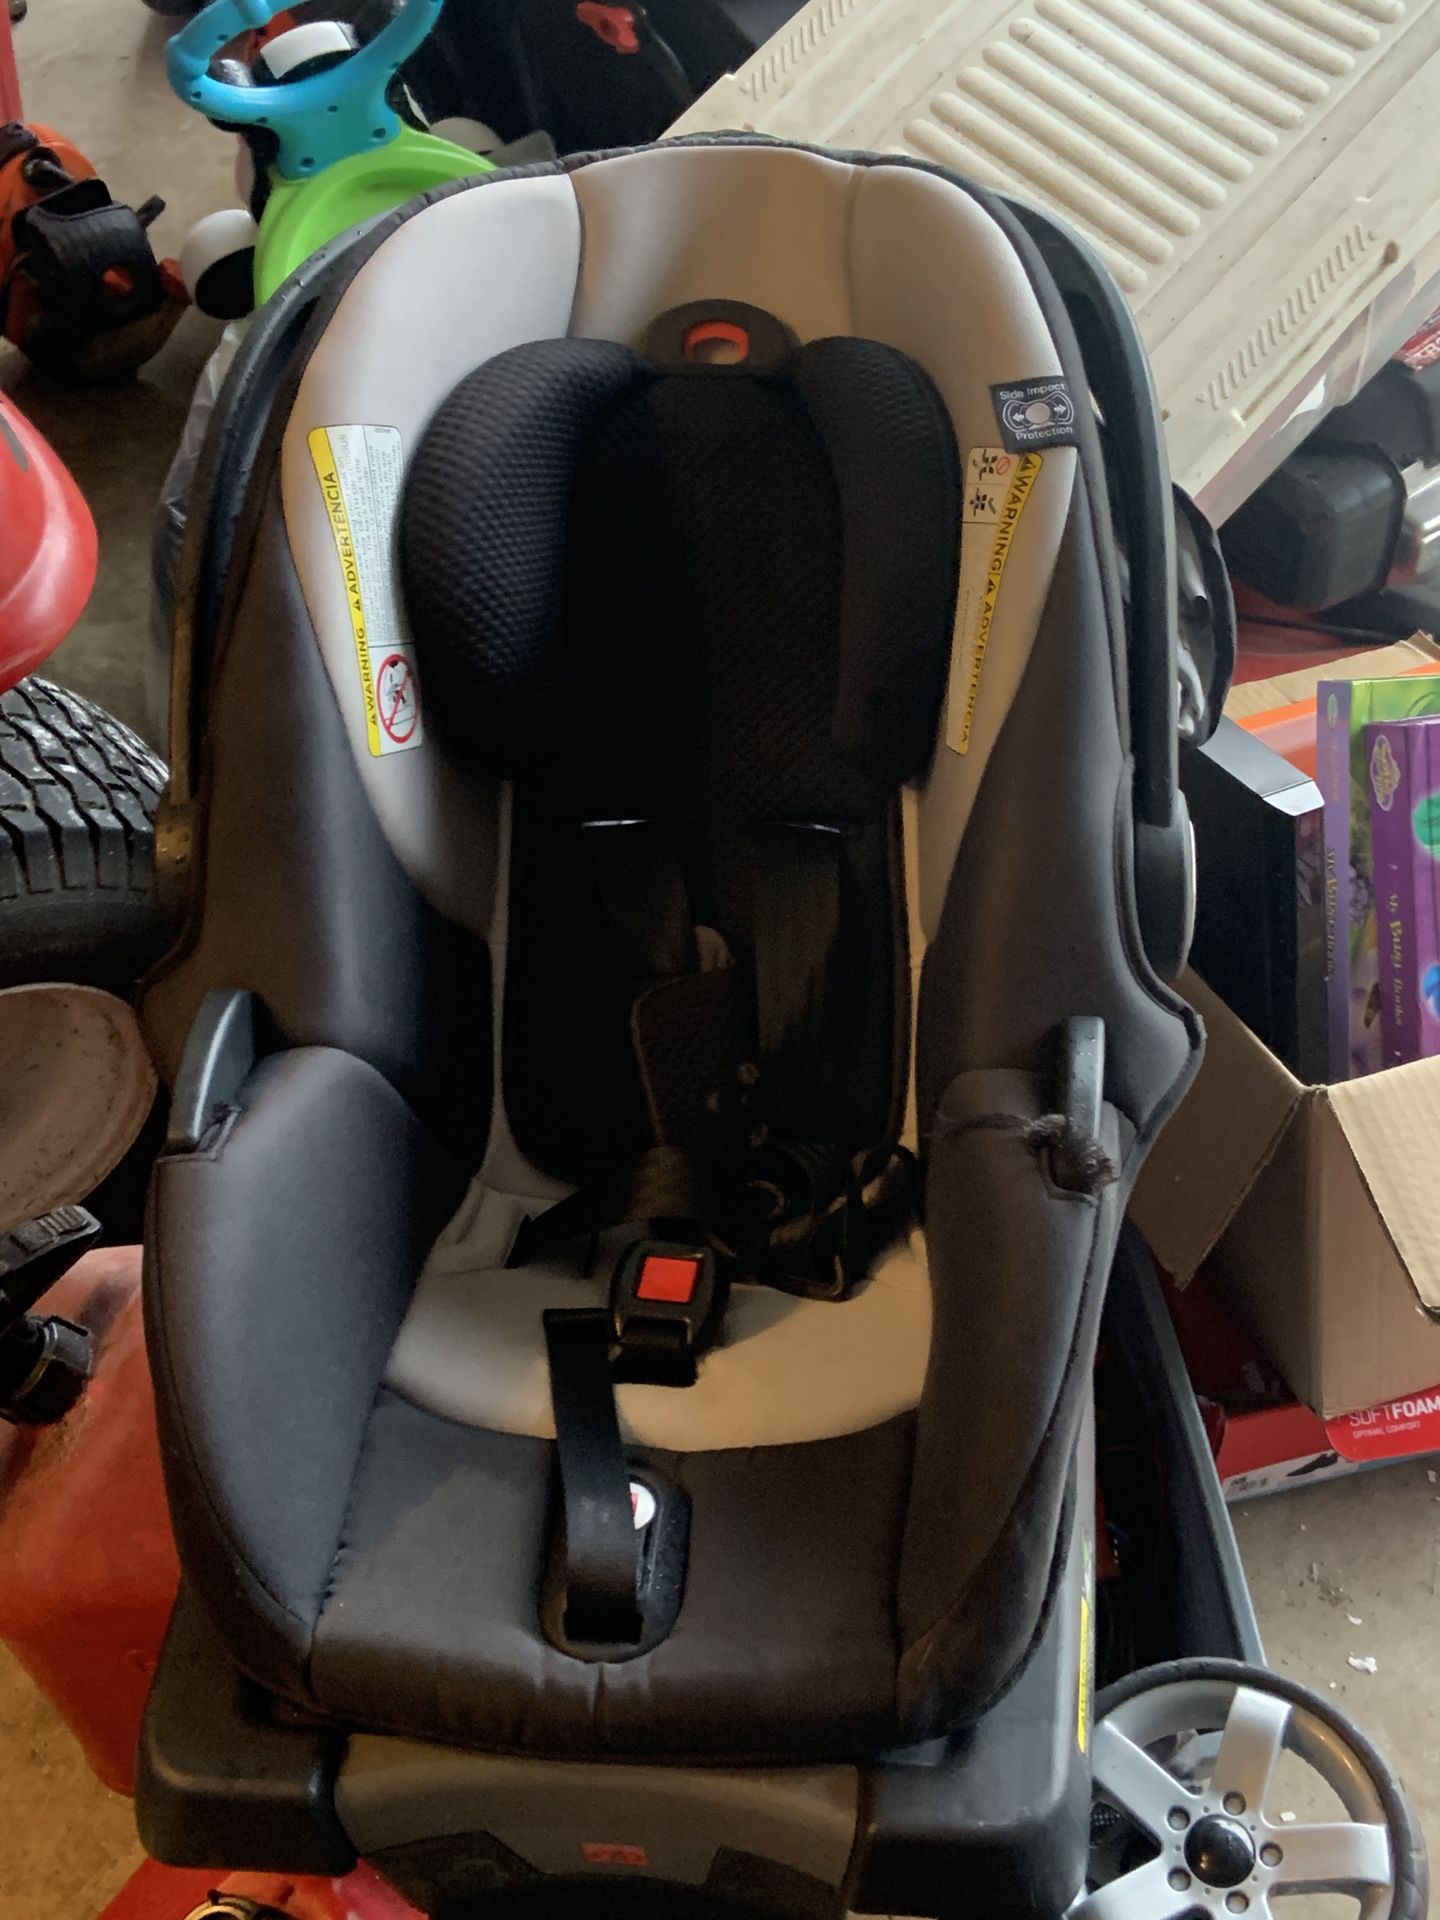 GB baby car seat